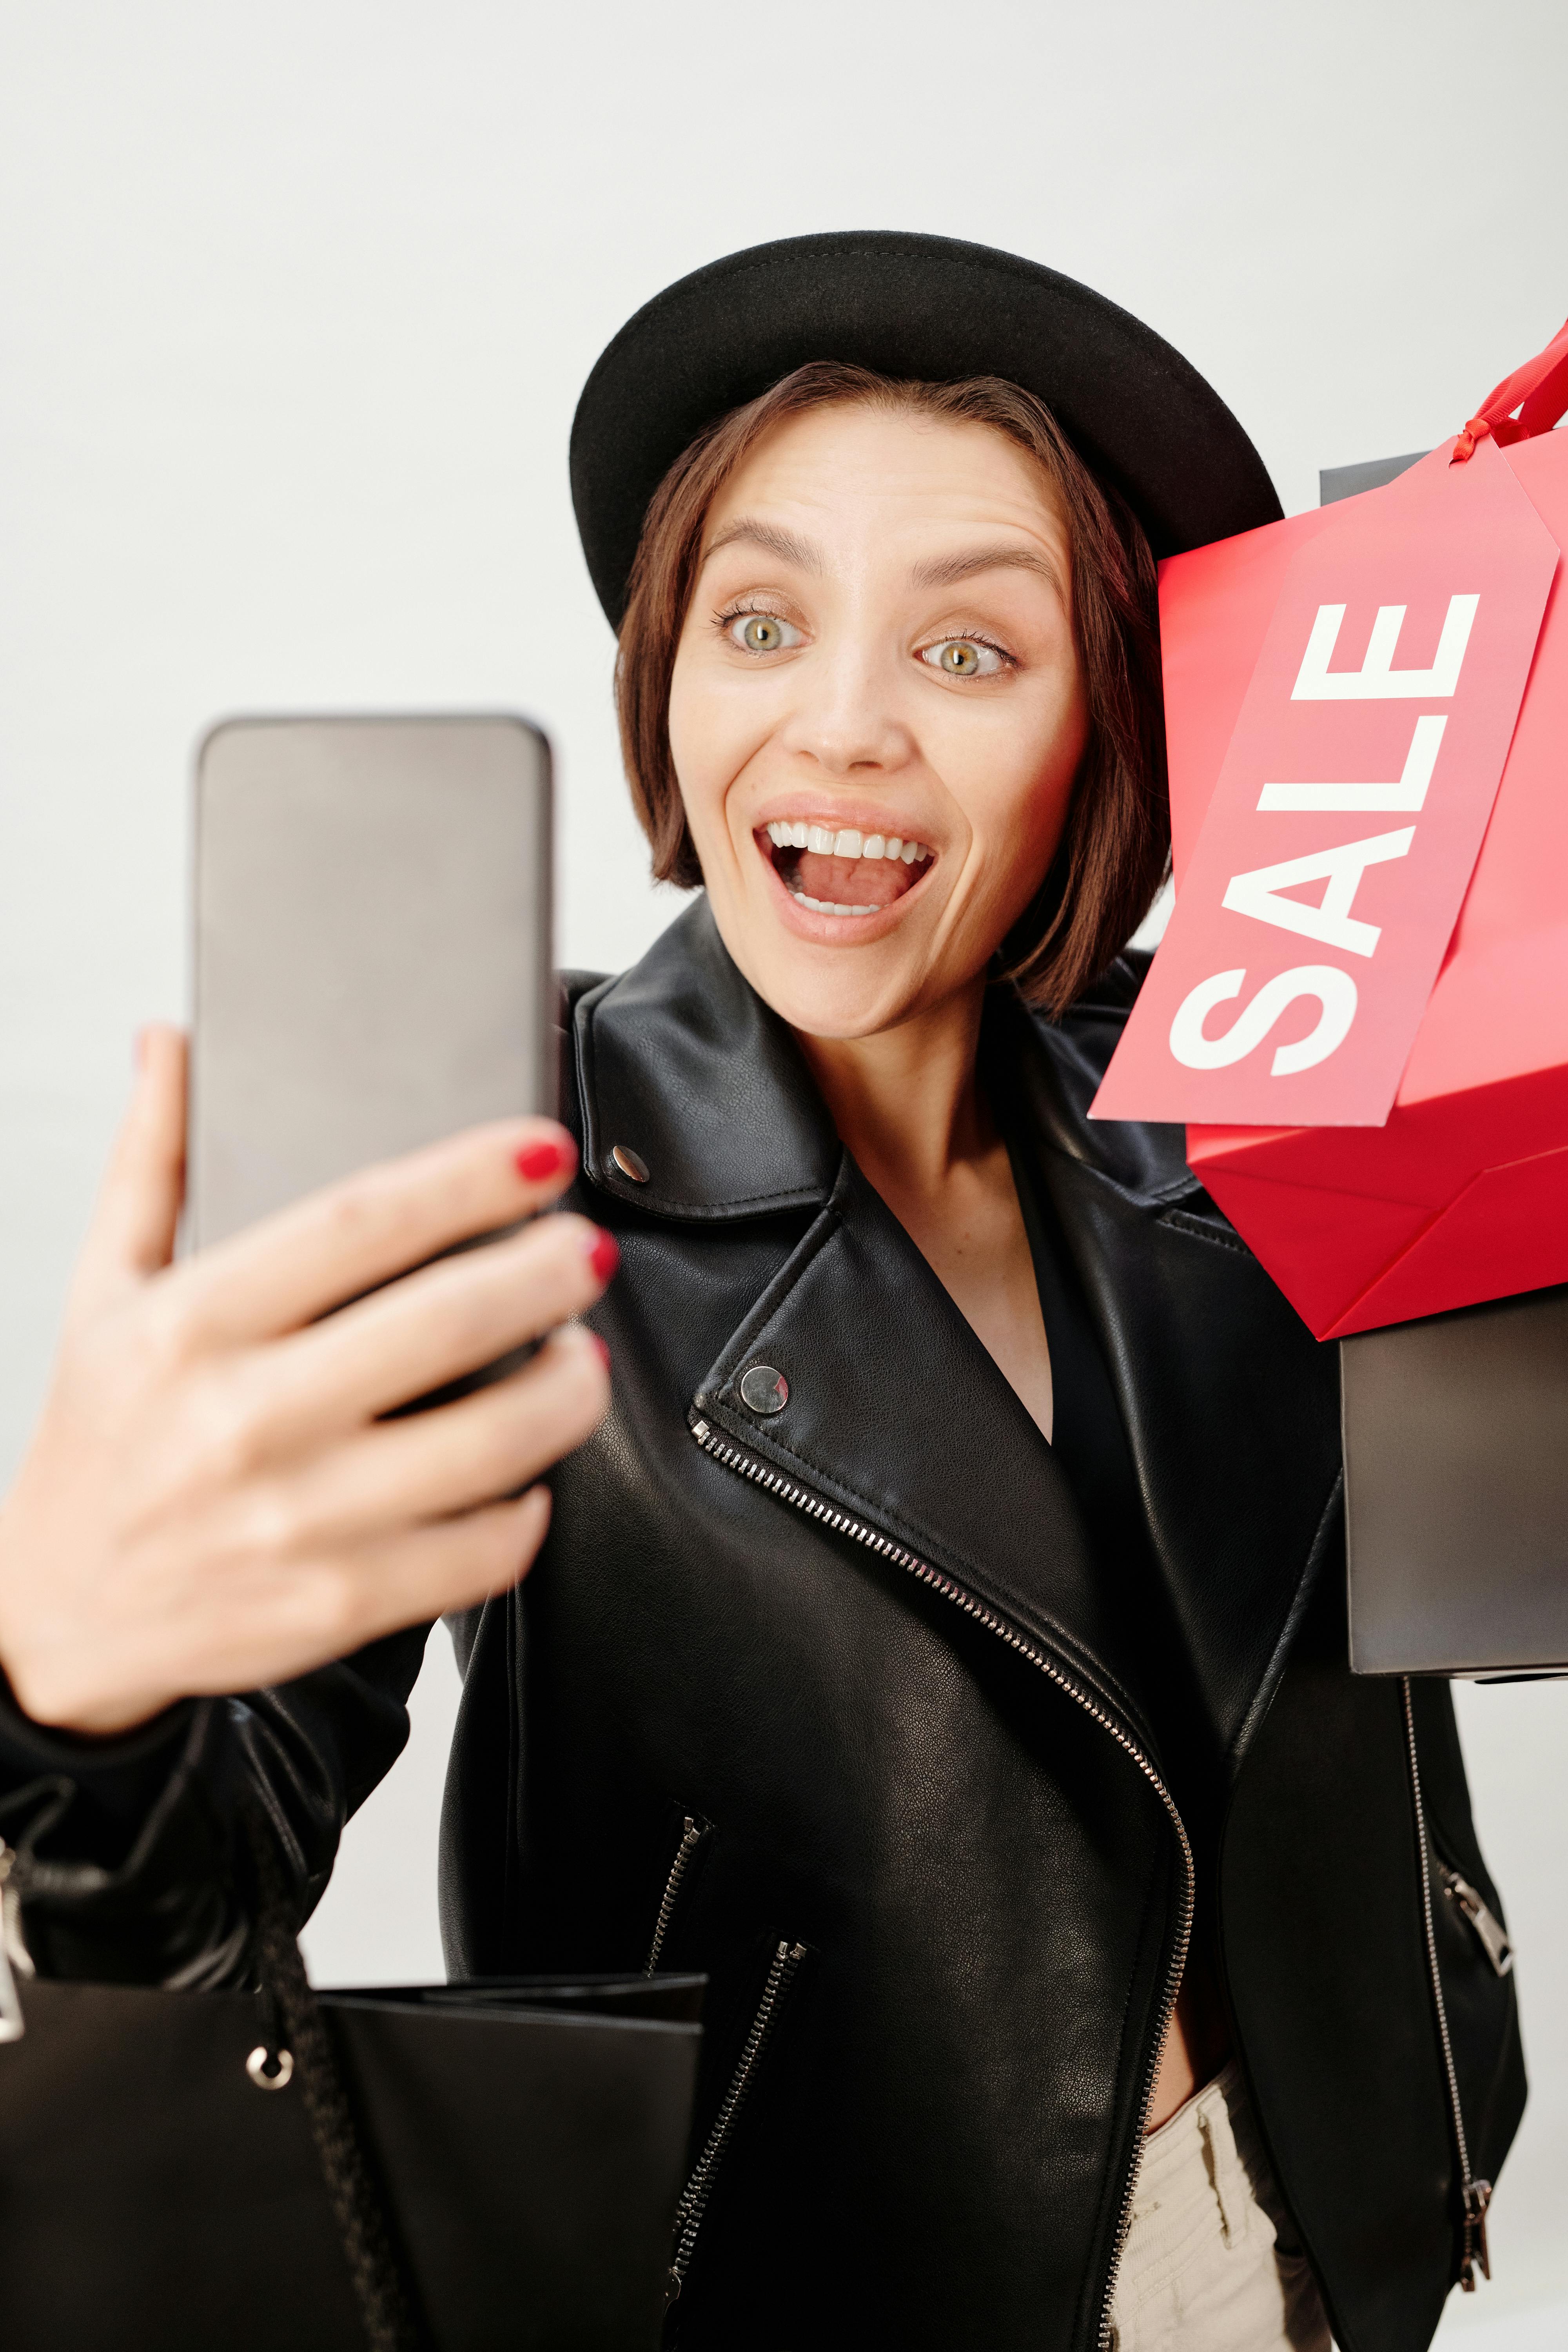 Selfie Store Photos, Download The BEST Free Selfie Store Stock Photos ...